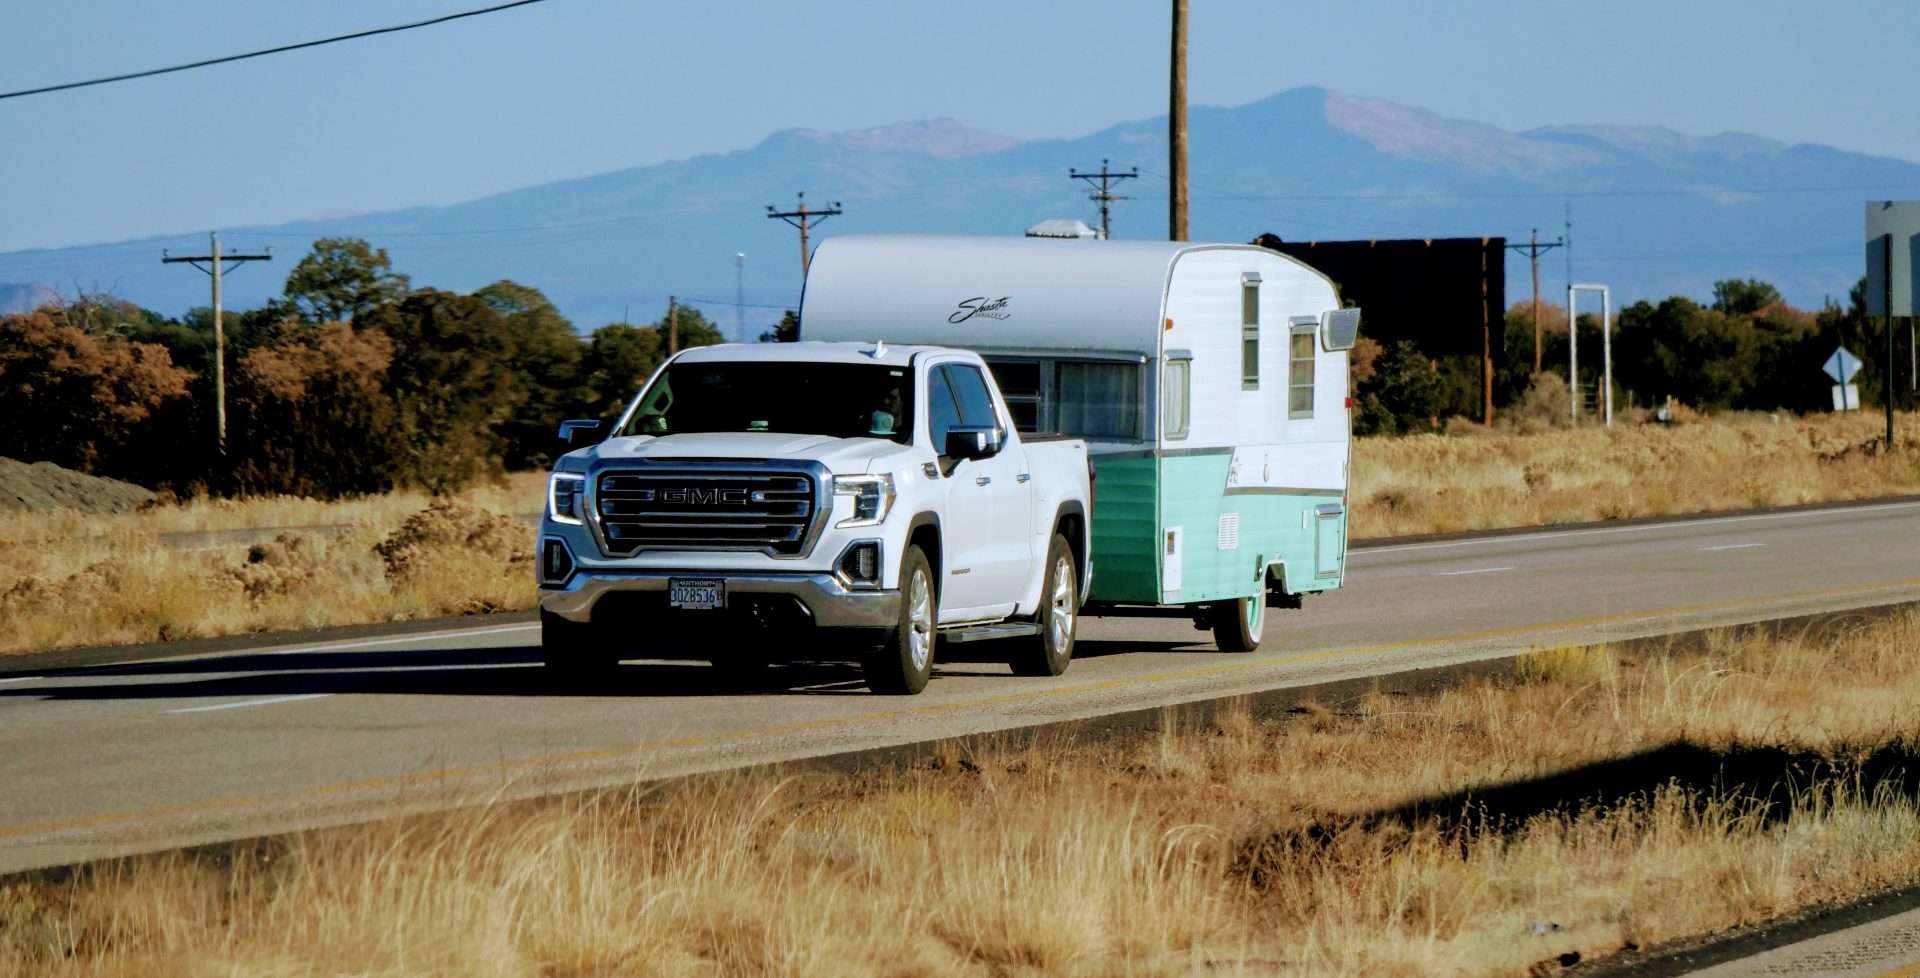 Truck towing Shasta camper